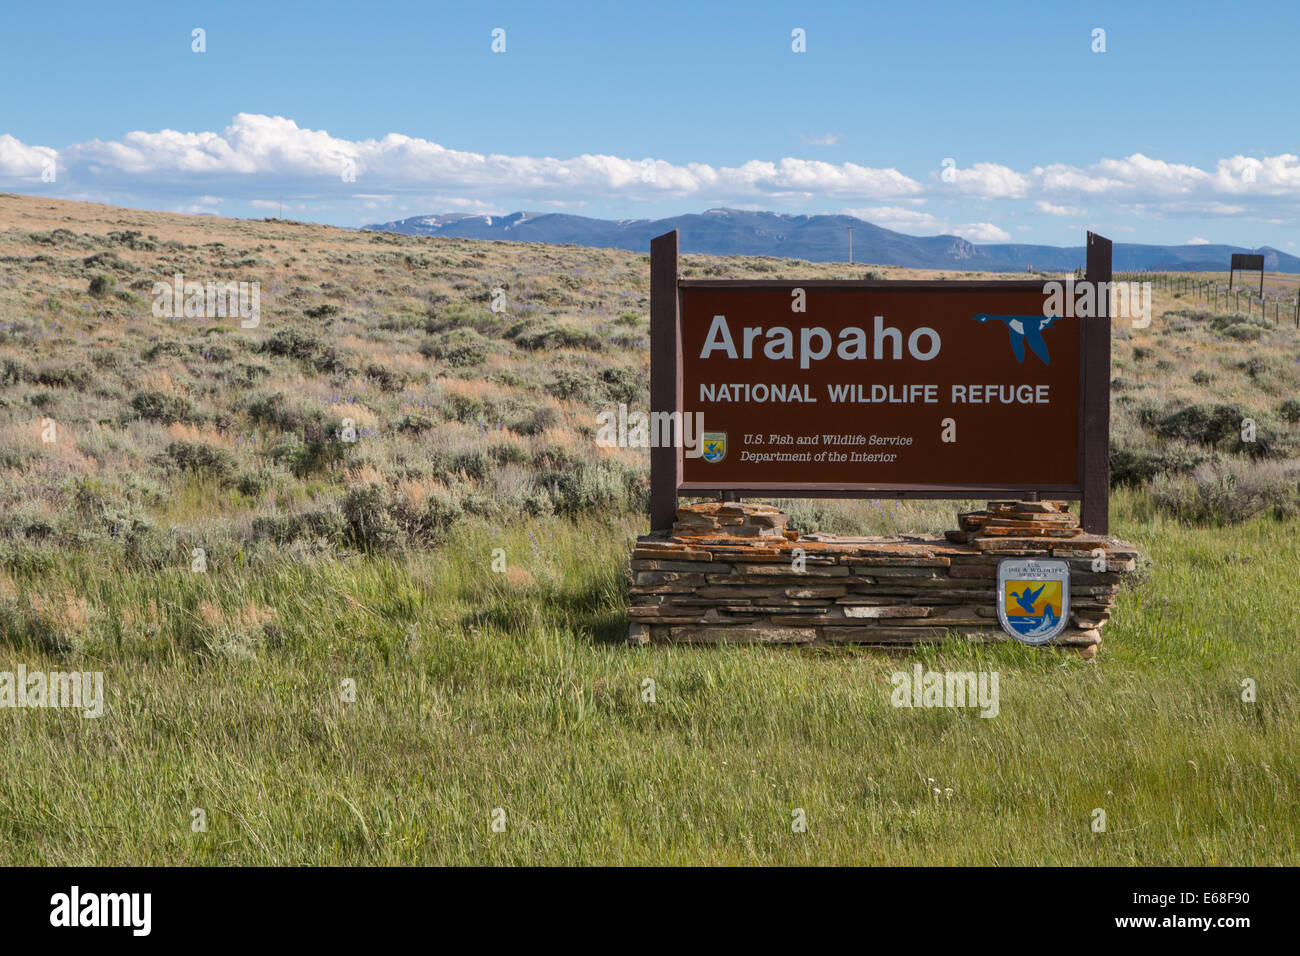 Arapaho National Wildlife Refuge Zeichen Stockfoto